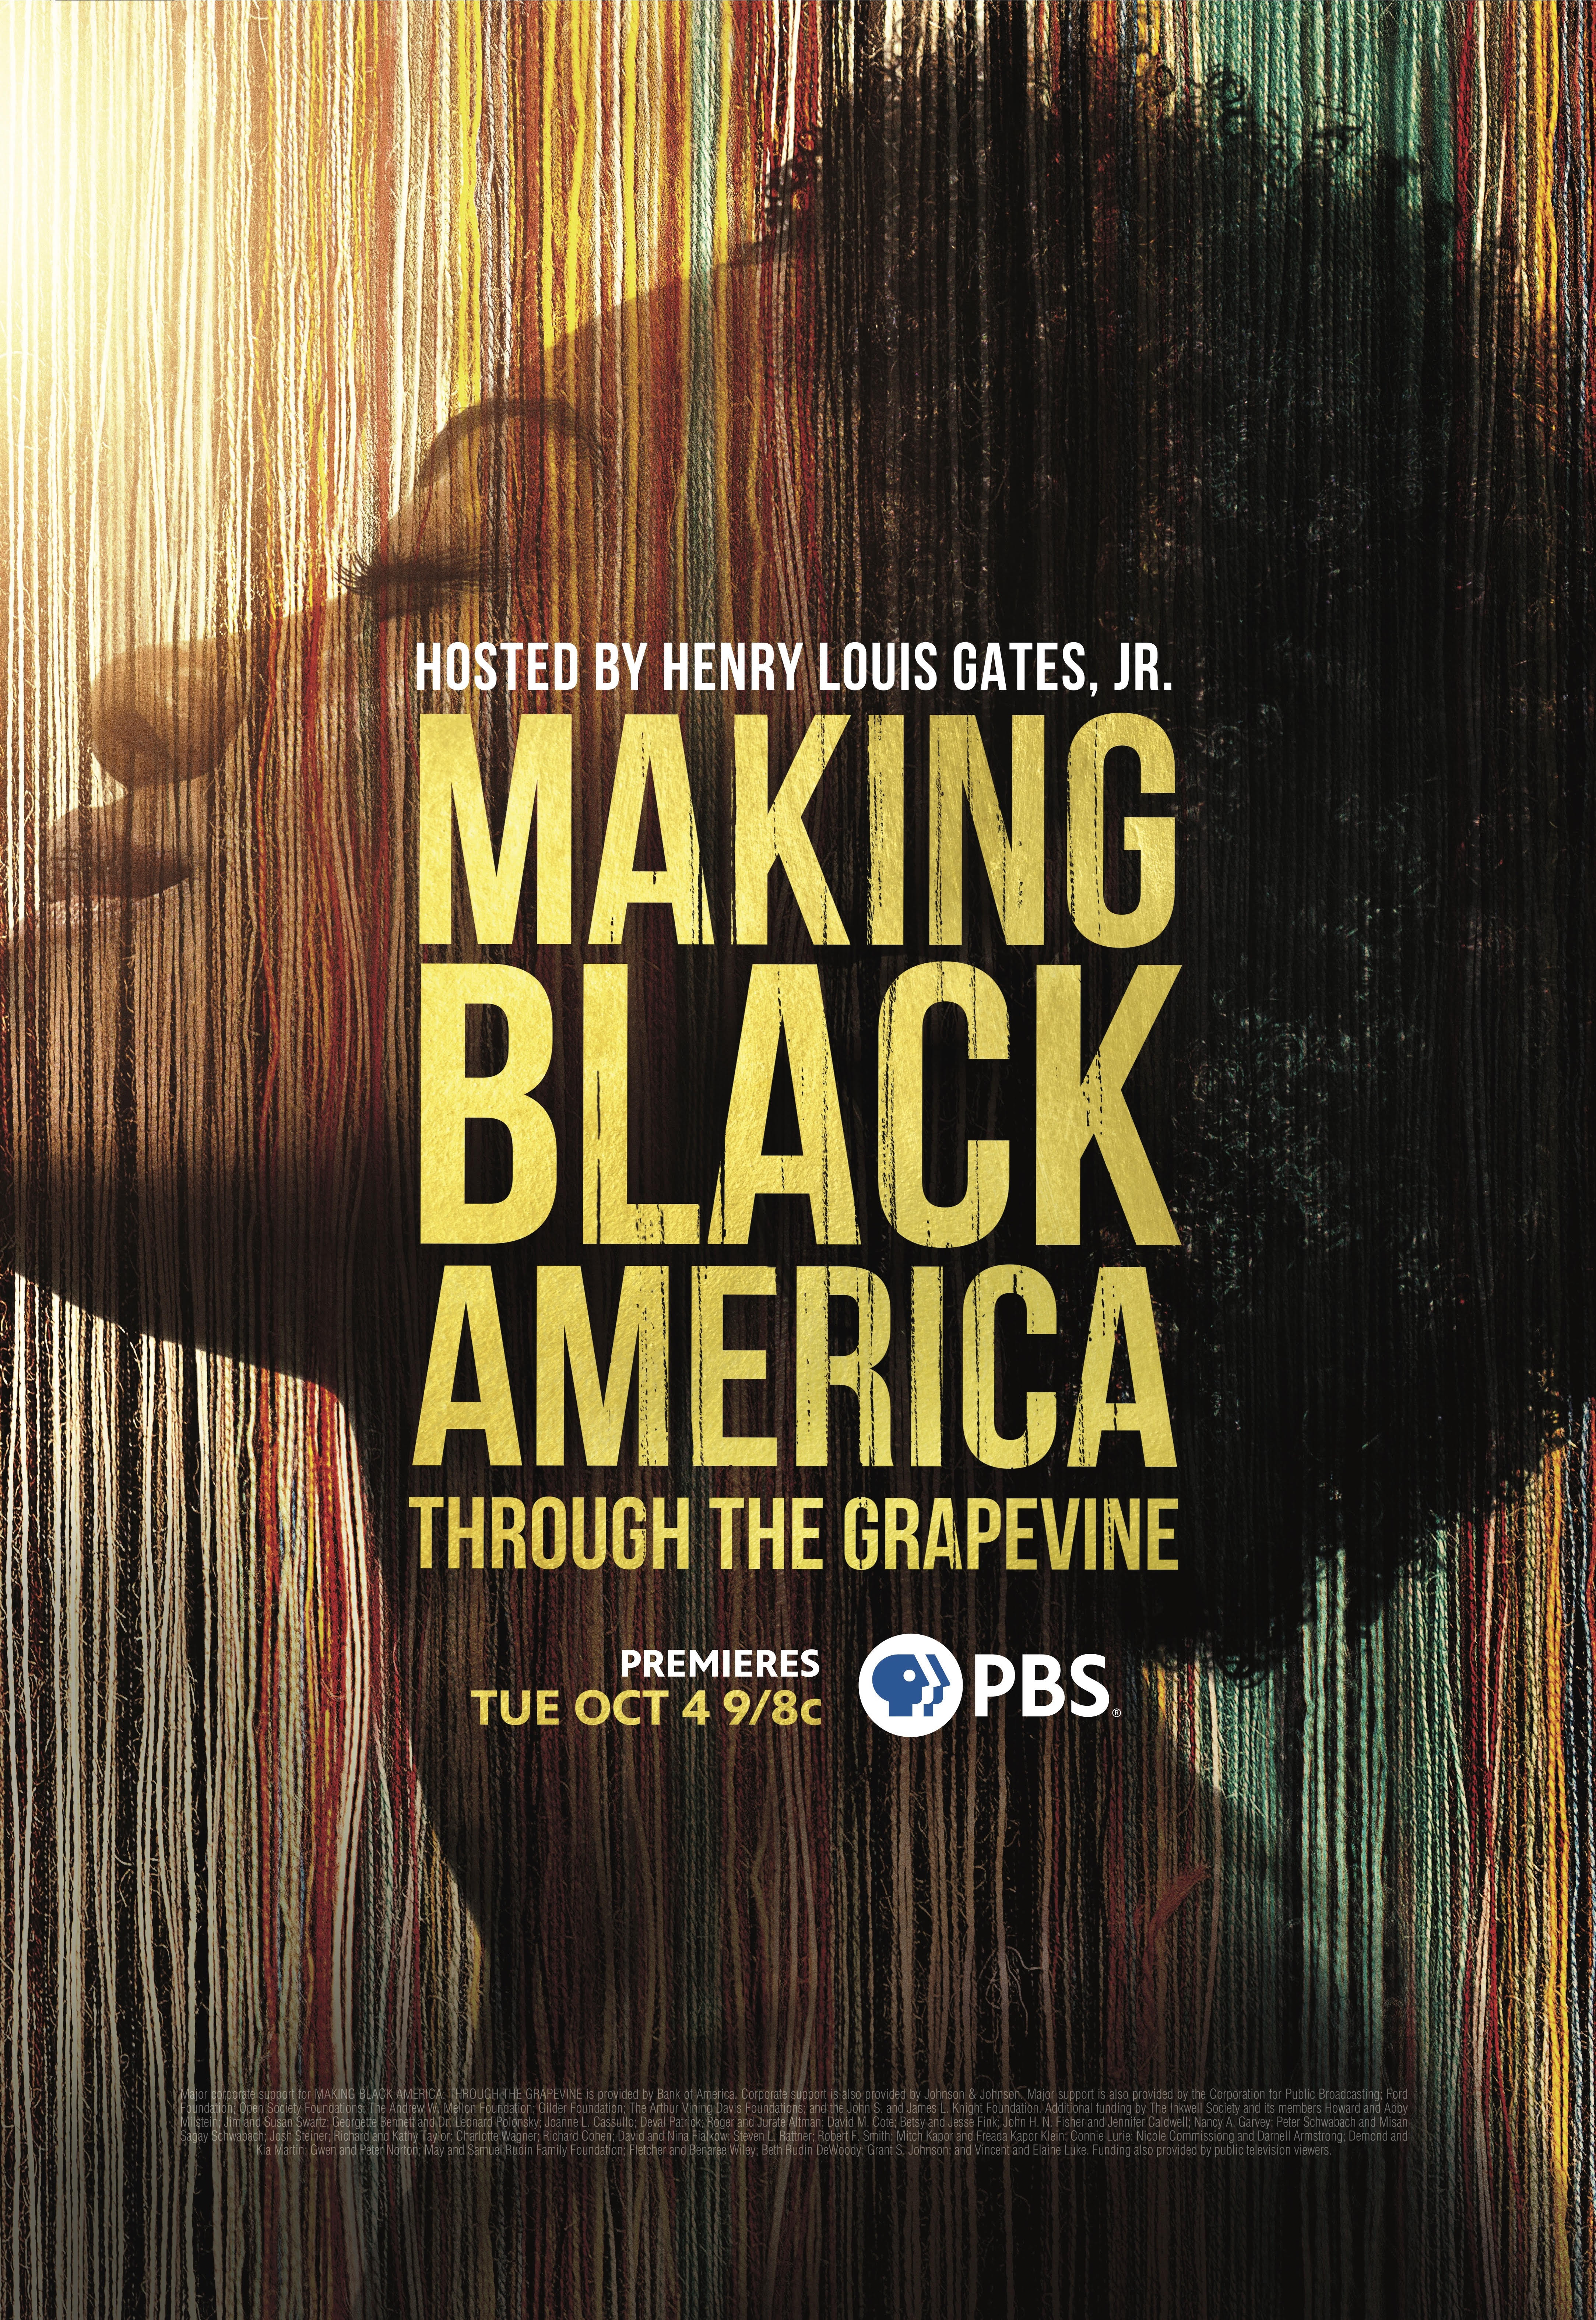 Making Black America: Through the Grapevine Season 1 Episode 1